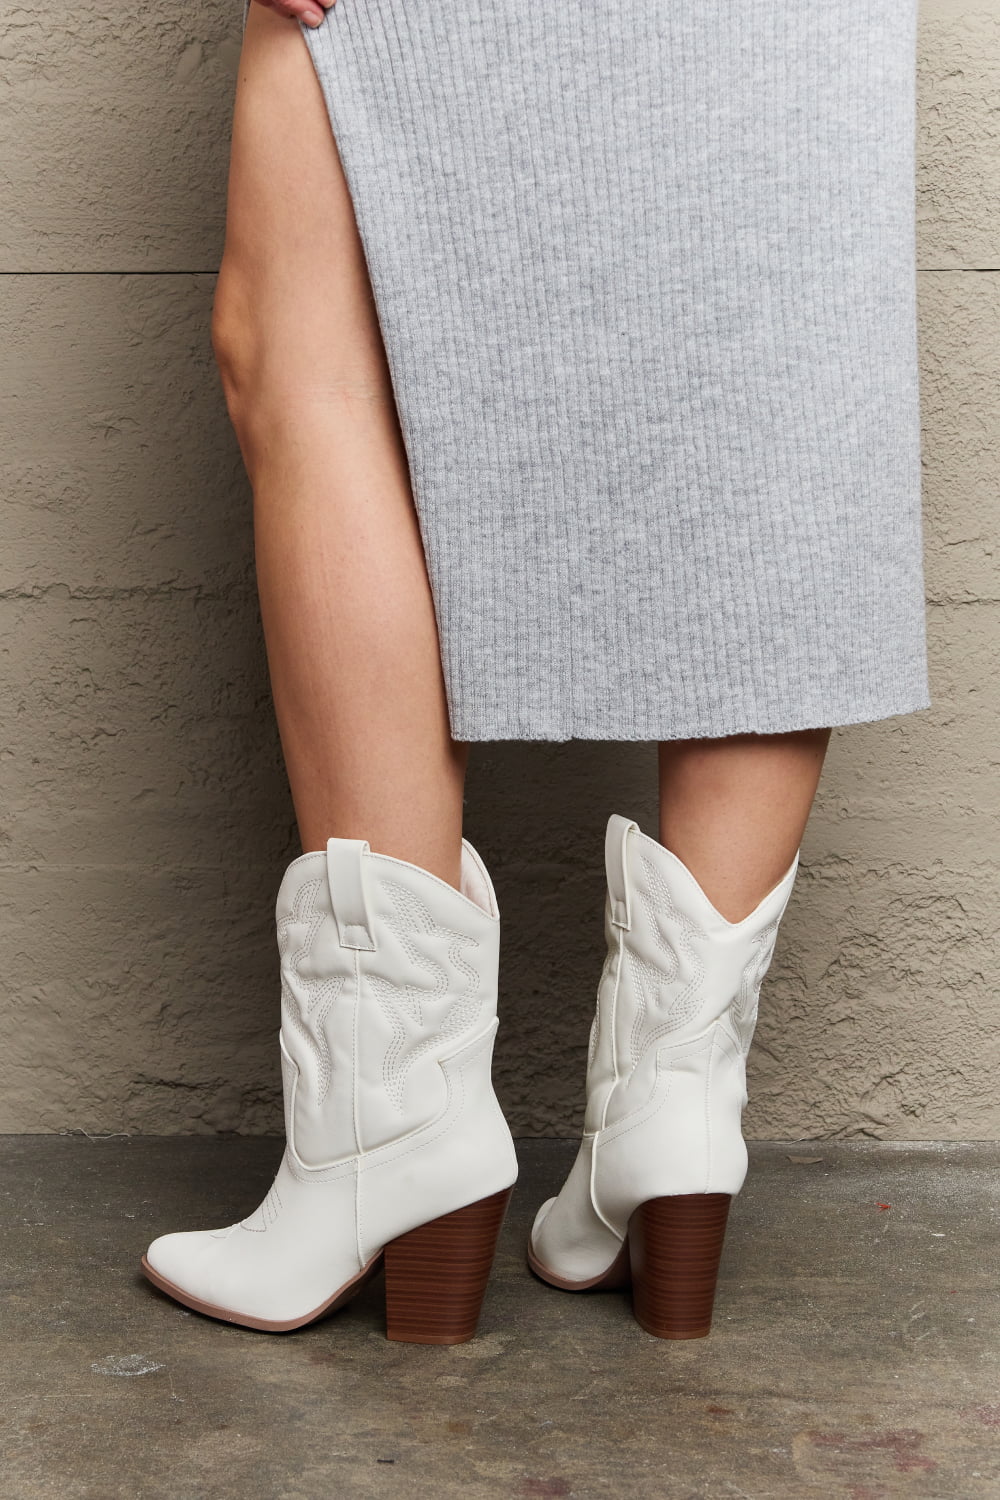 Bella Cowboy Boots in White | Tigbuls Variety Fashion